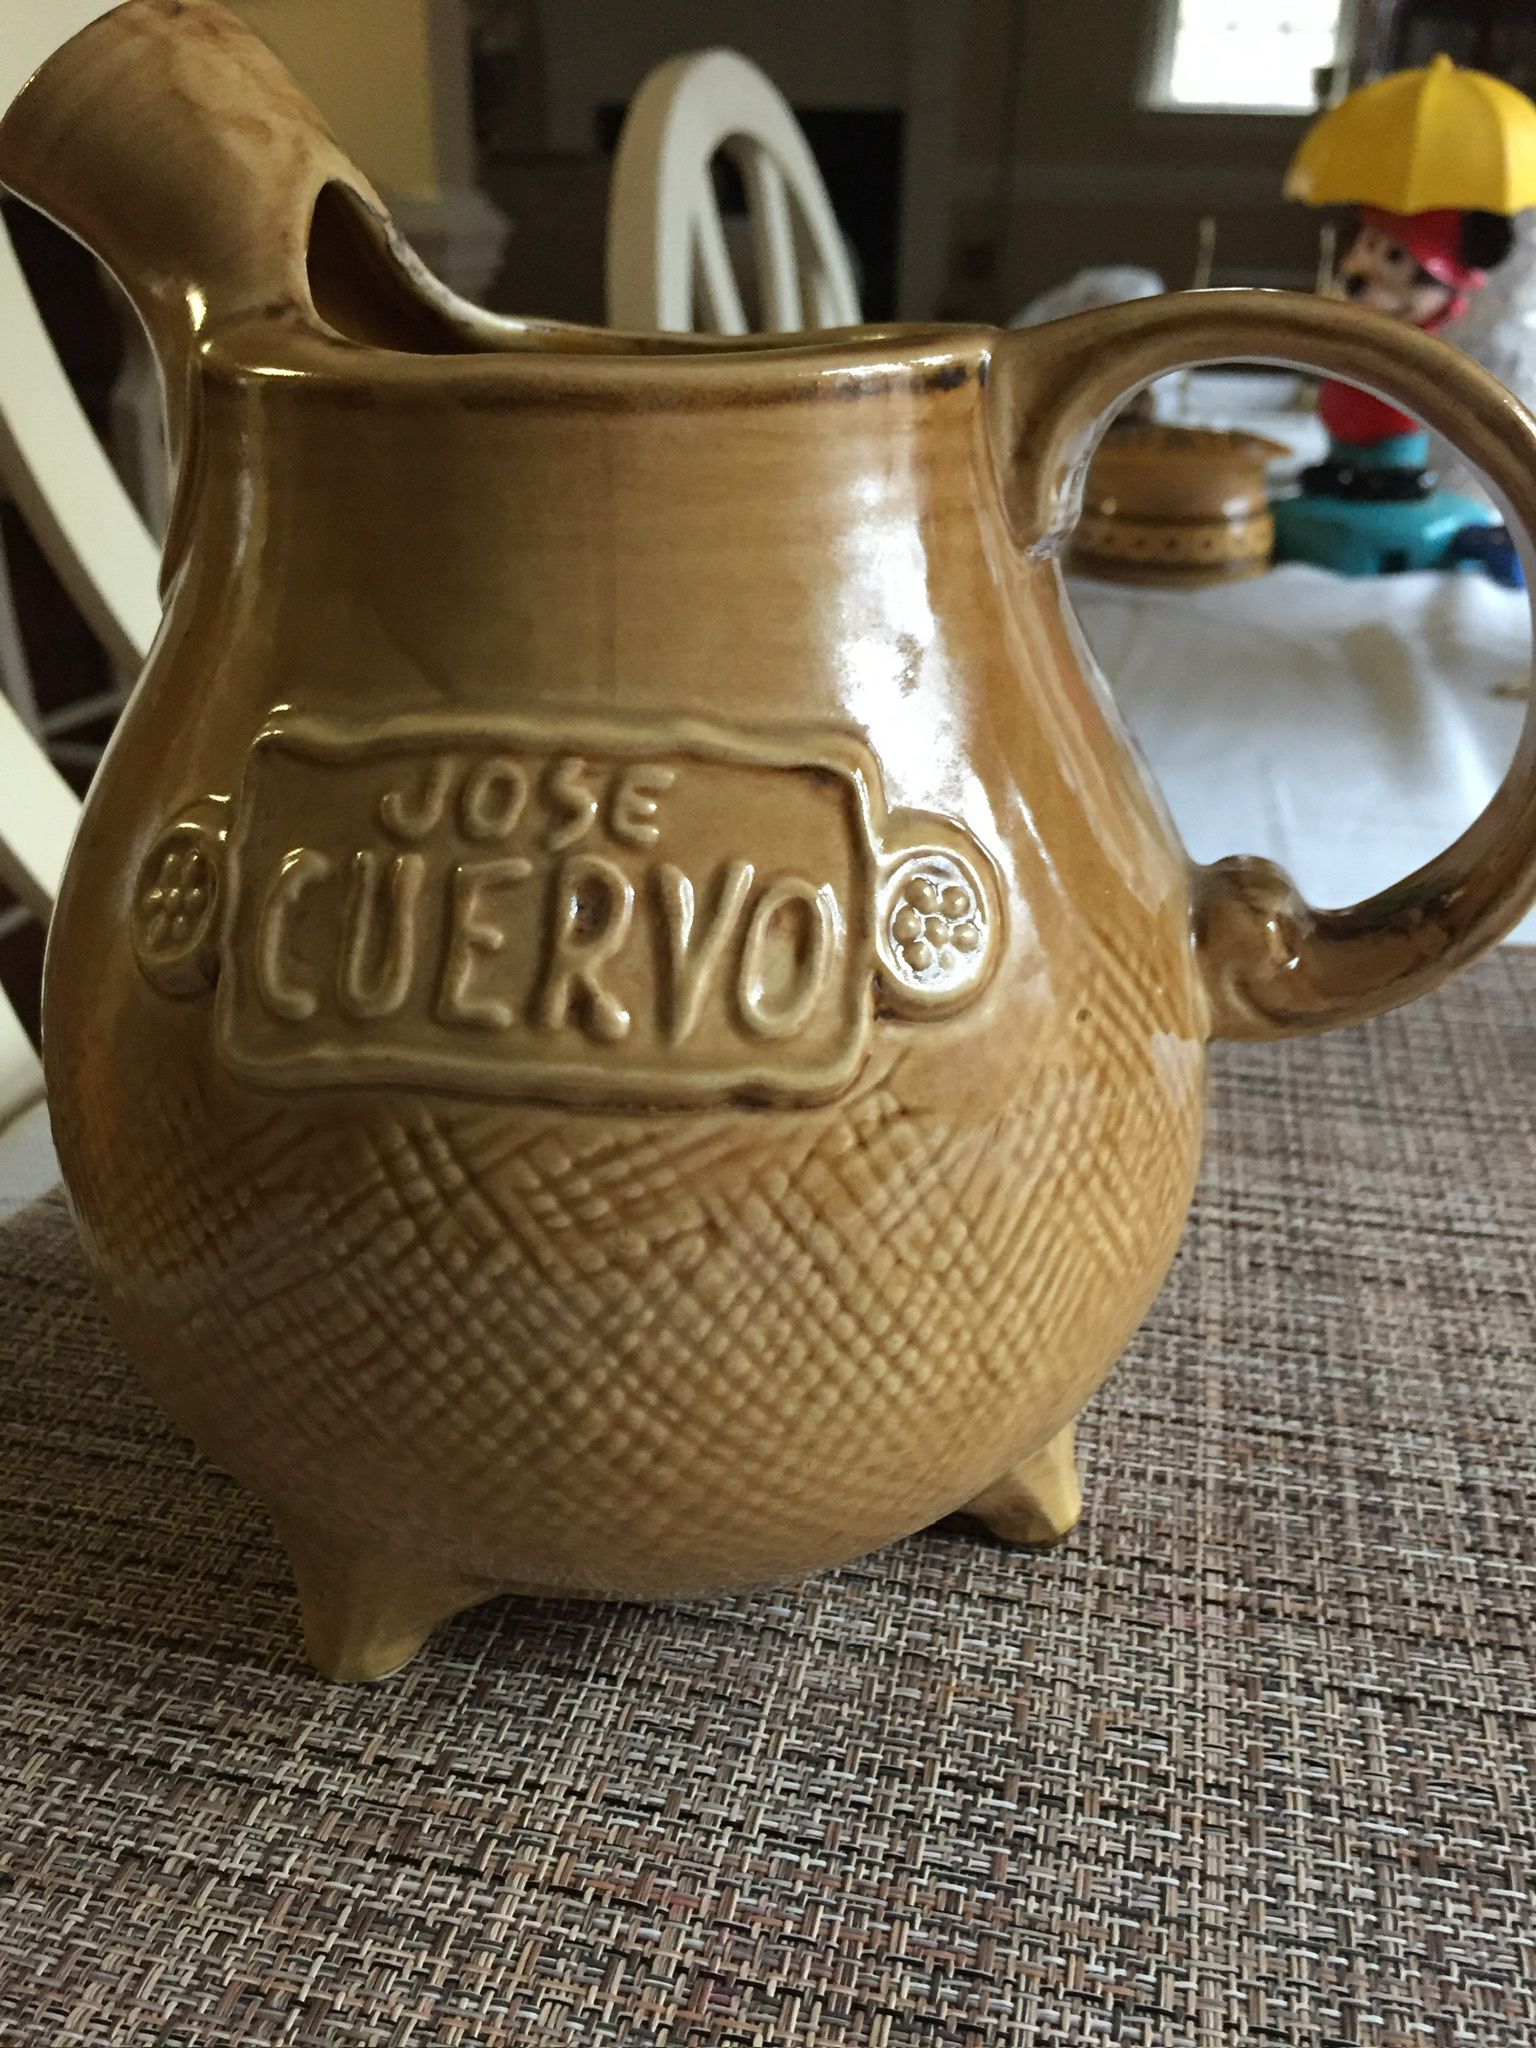 Vintage Jose Cuervo Pitcher